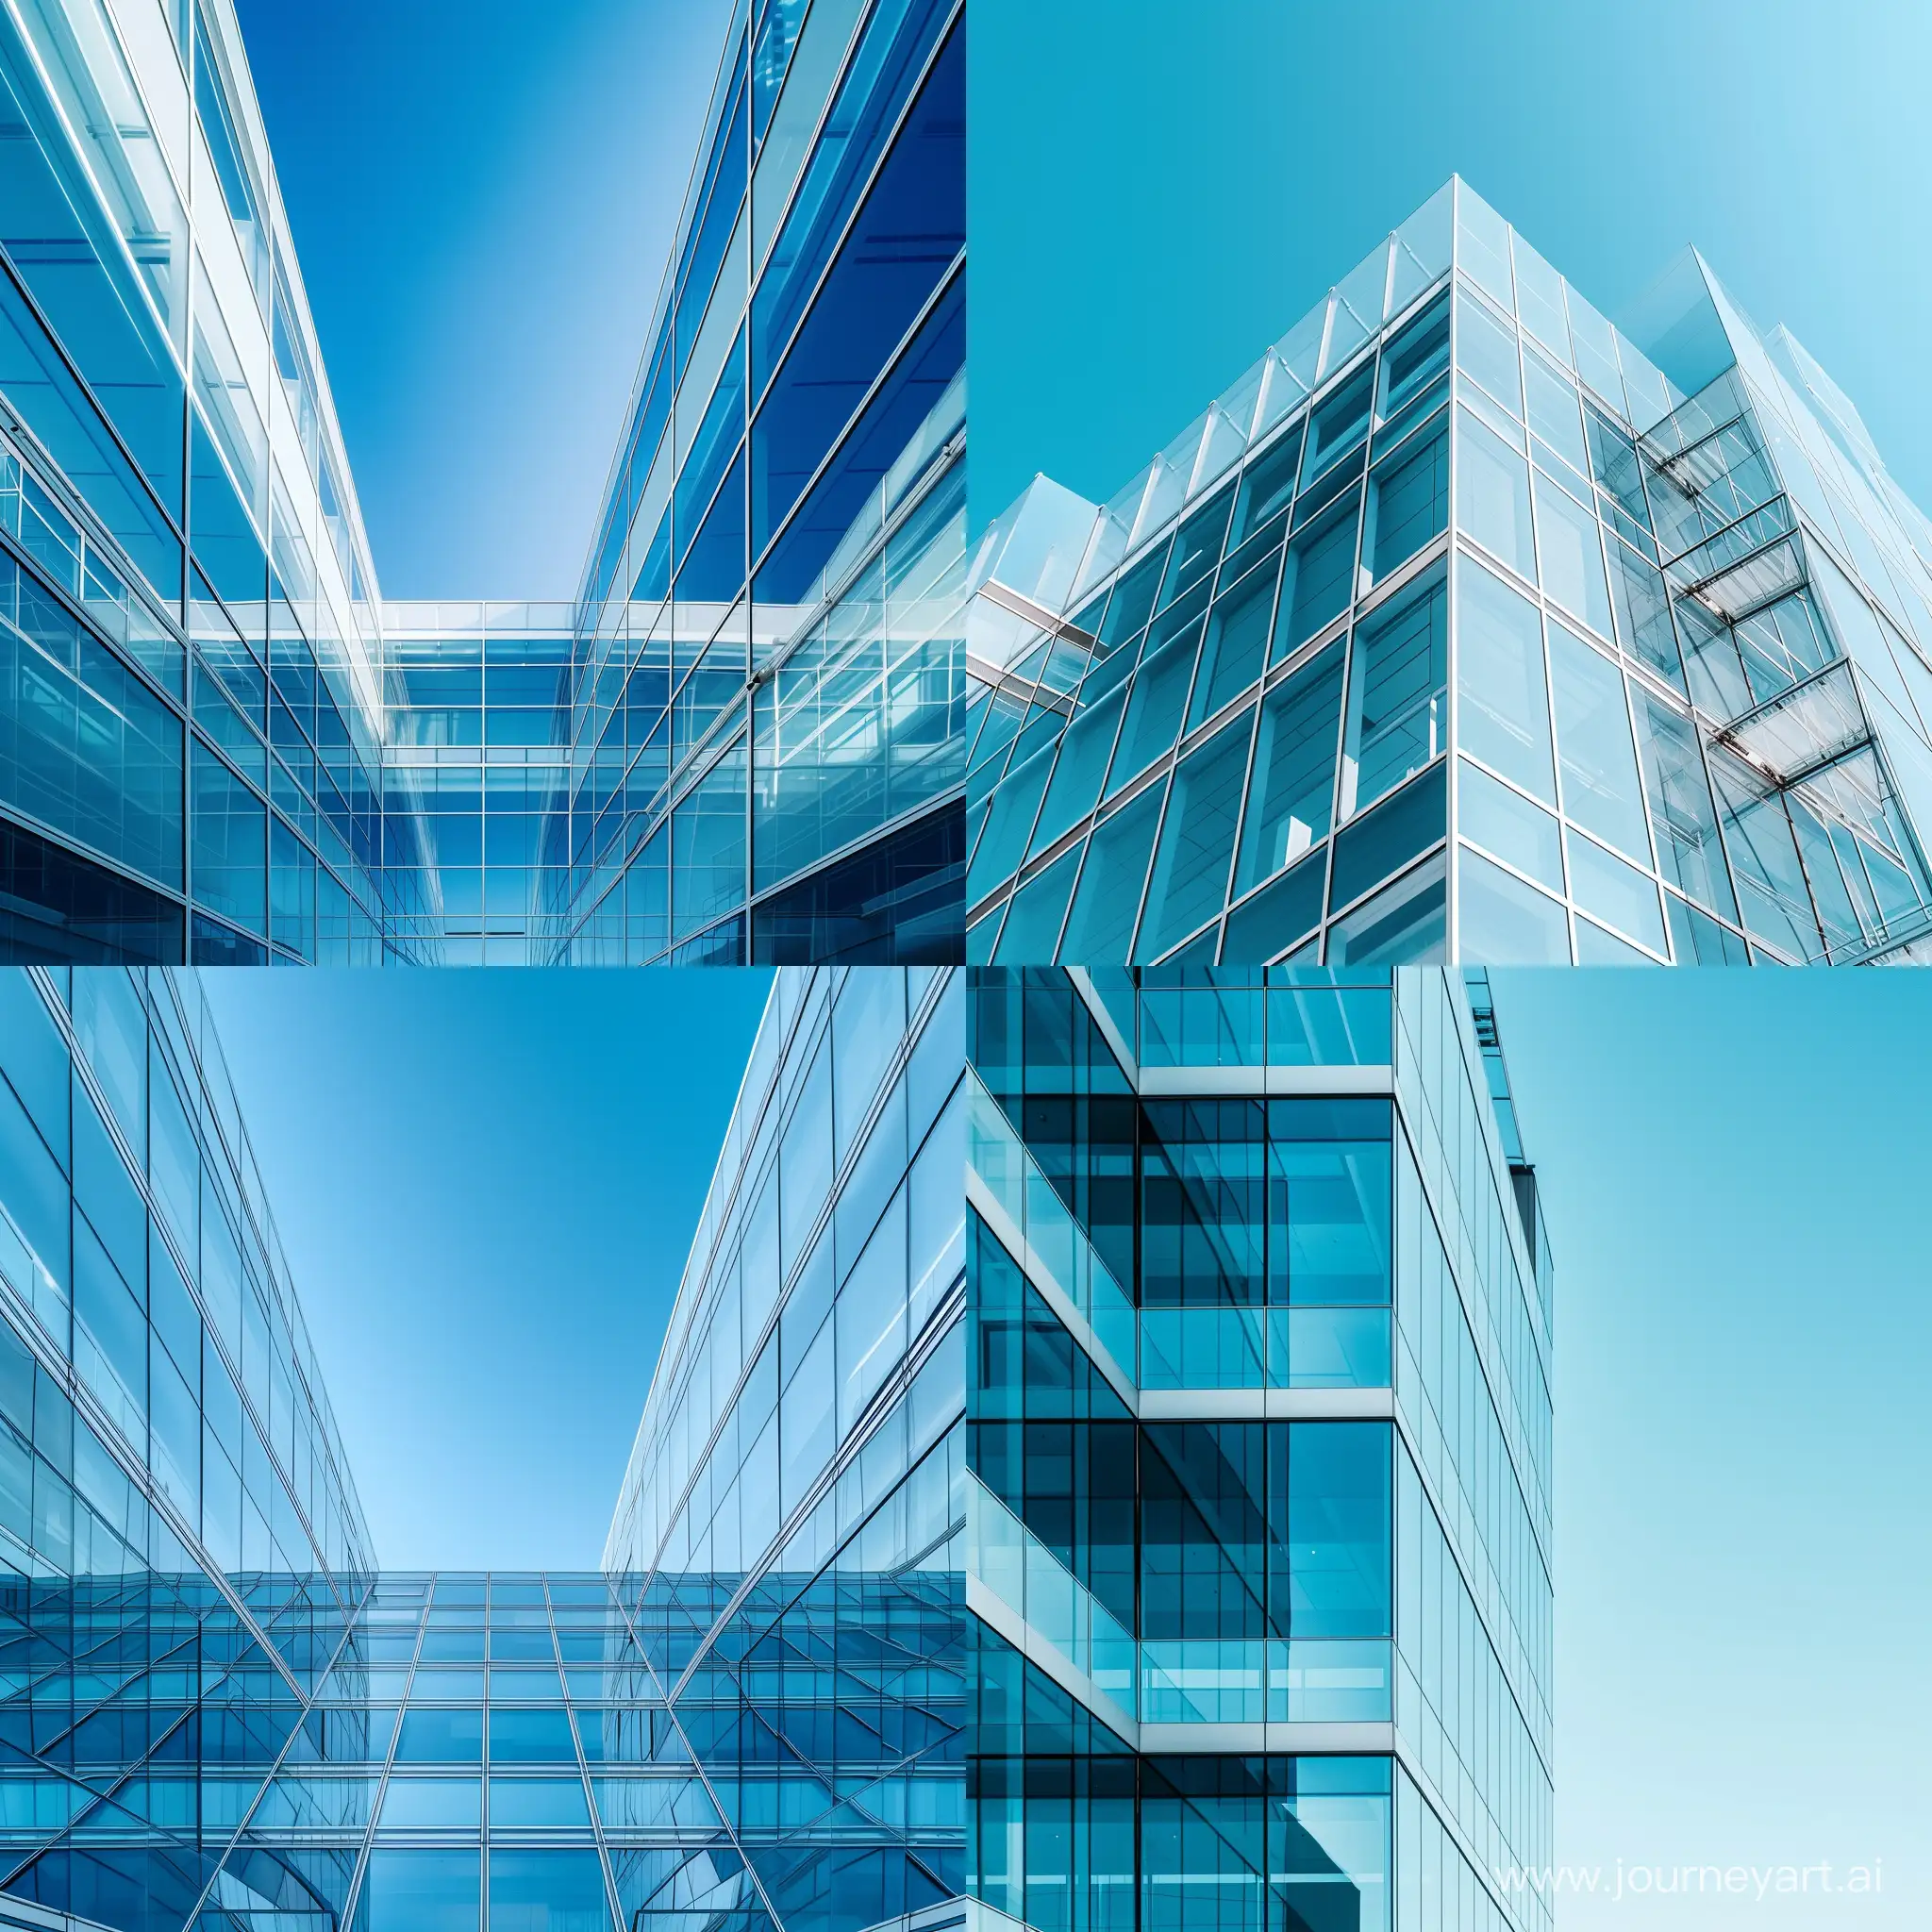 Futuristic-Glass-Building-Against-Blue-Sky